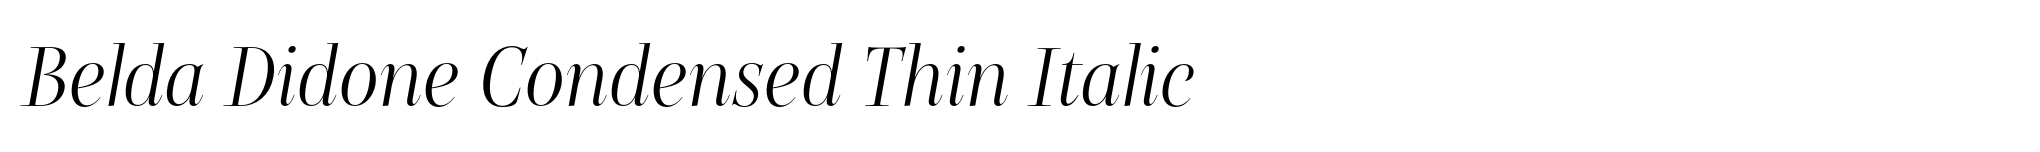 Belda Didone Condensed Thin Italic image